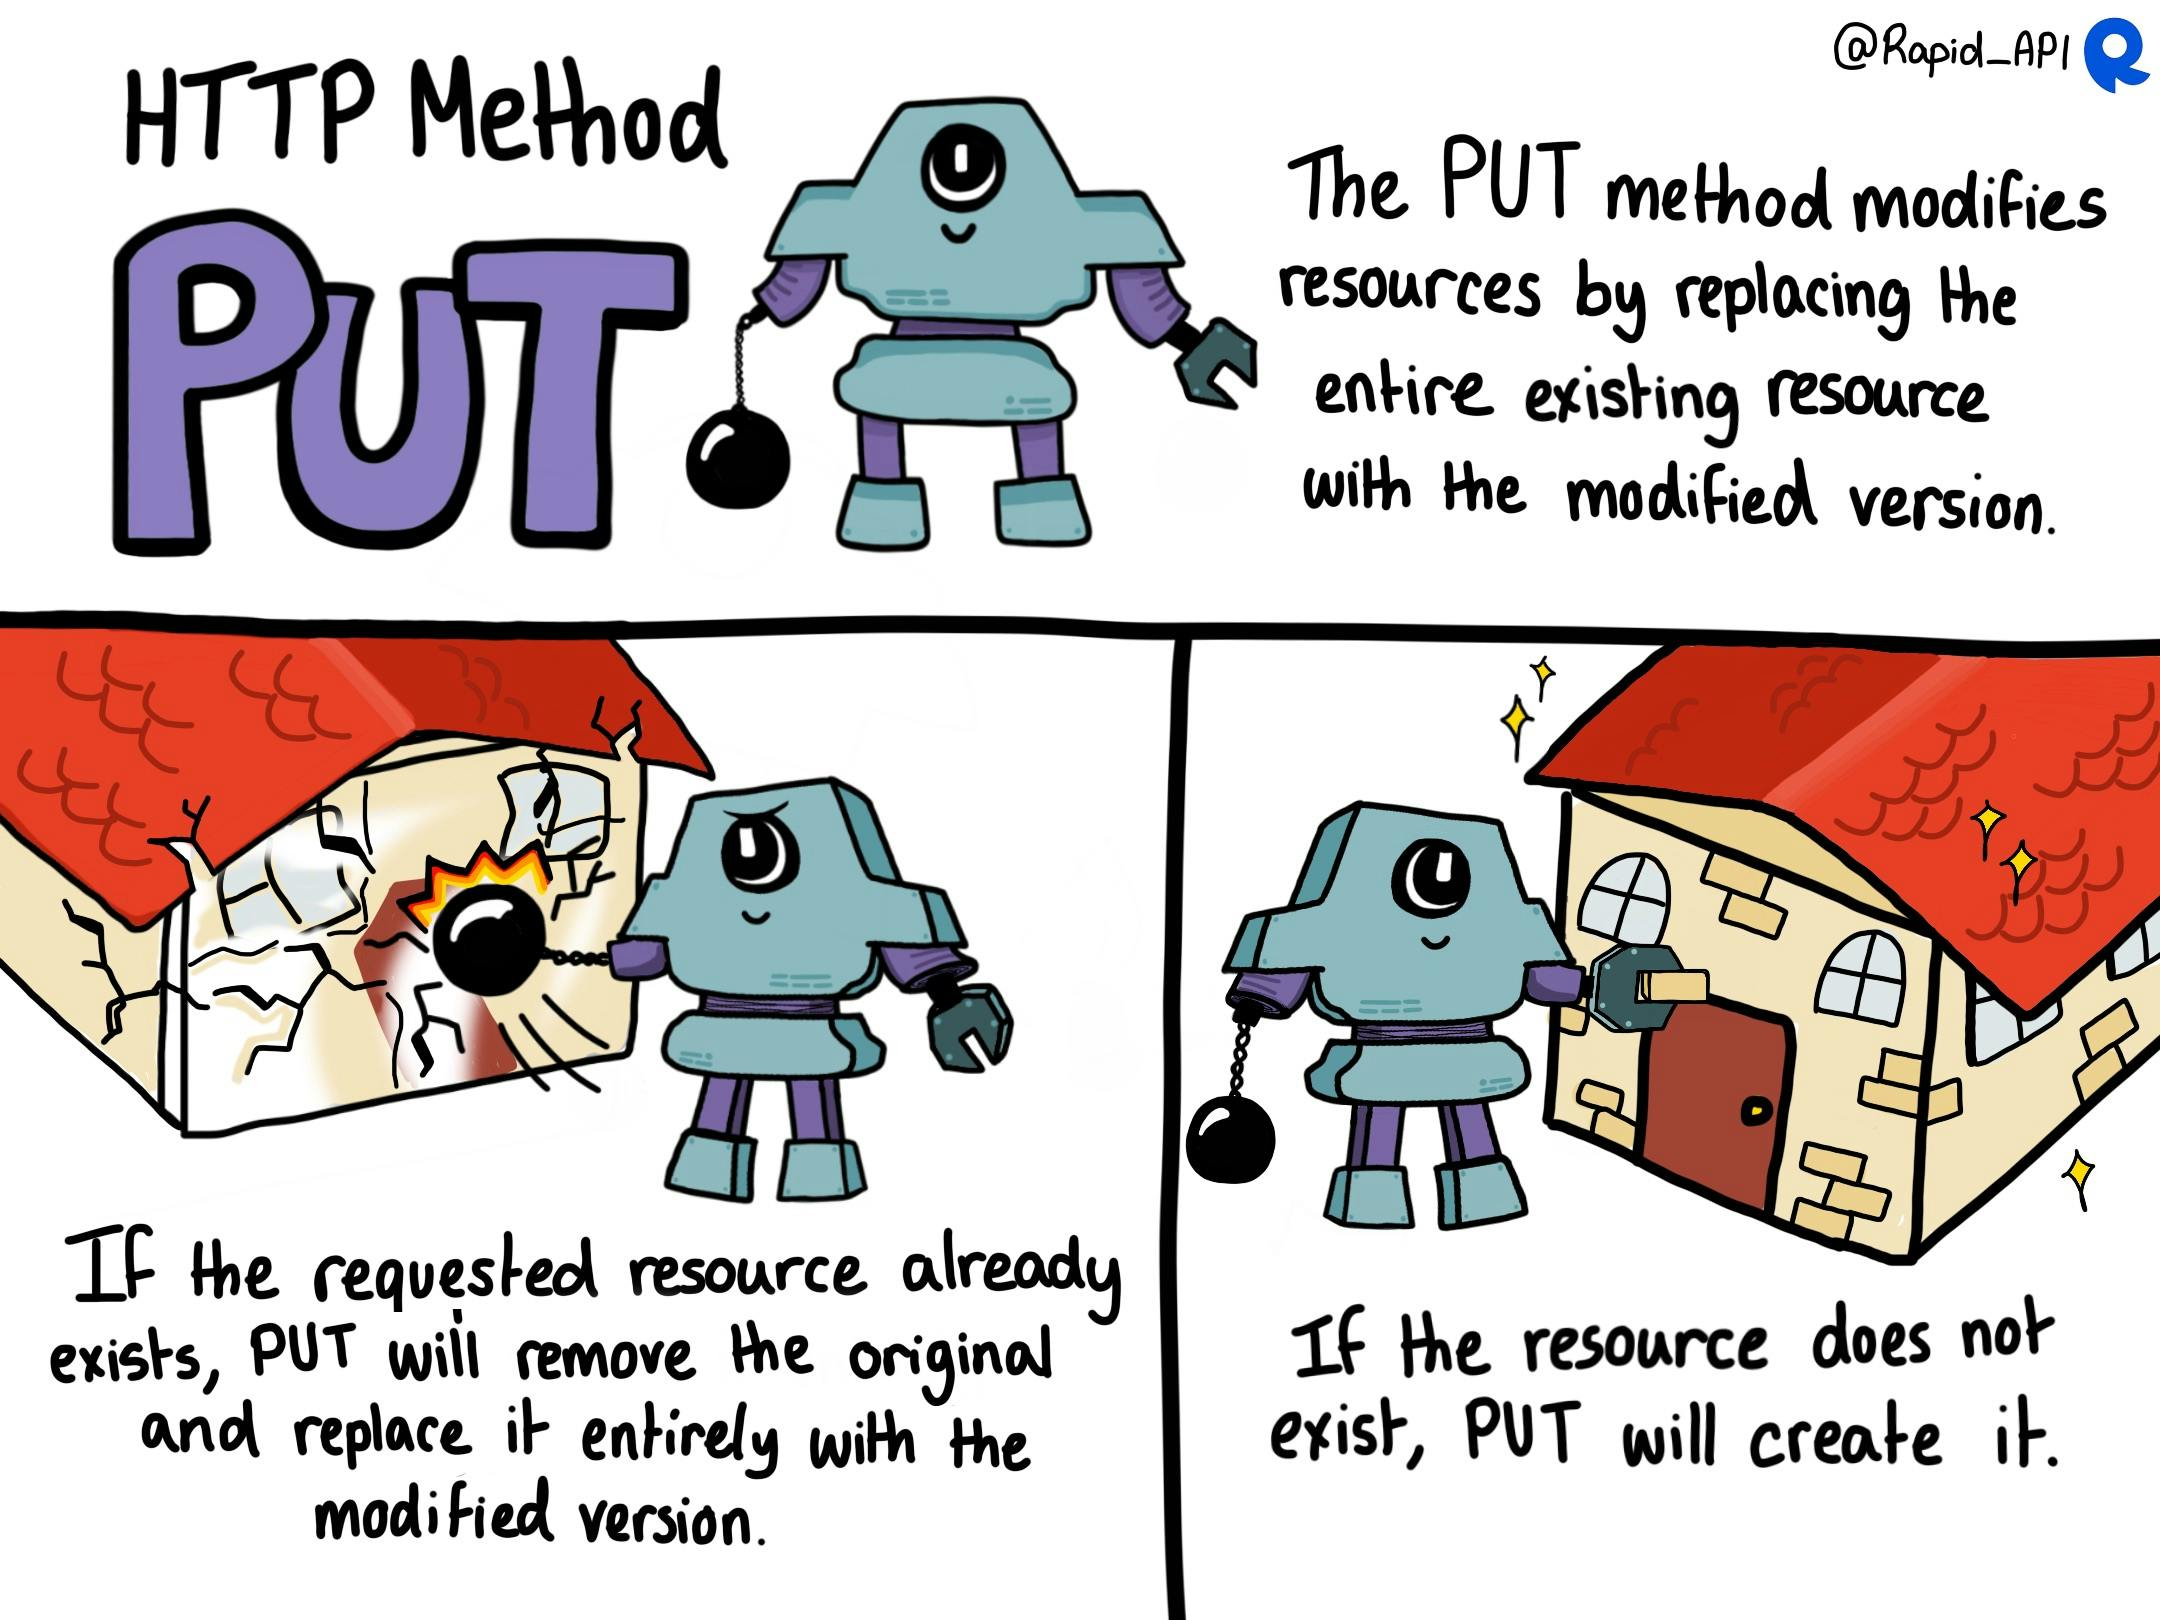 HTTP Methods: PUT vs PATCH